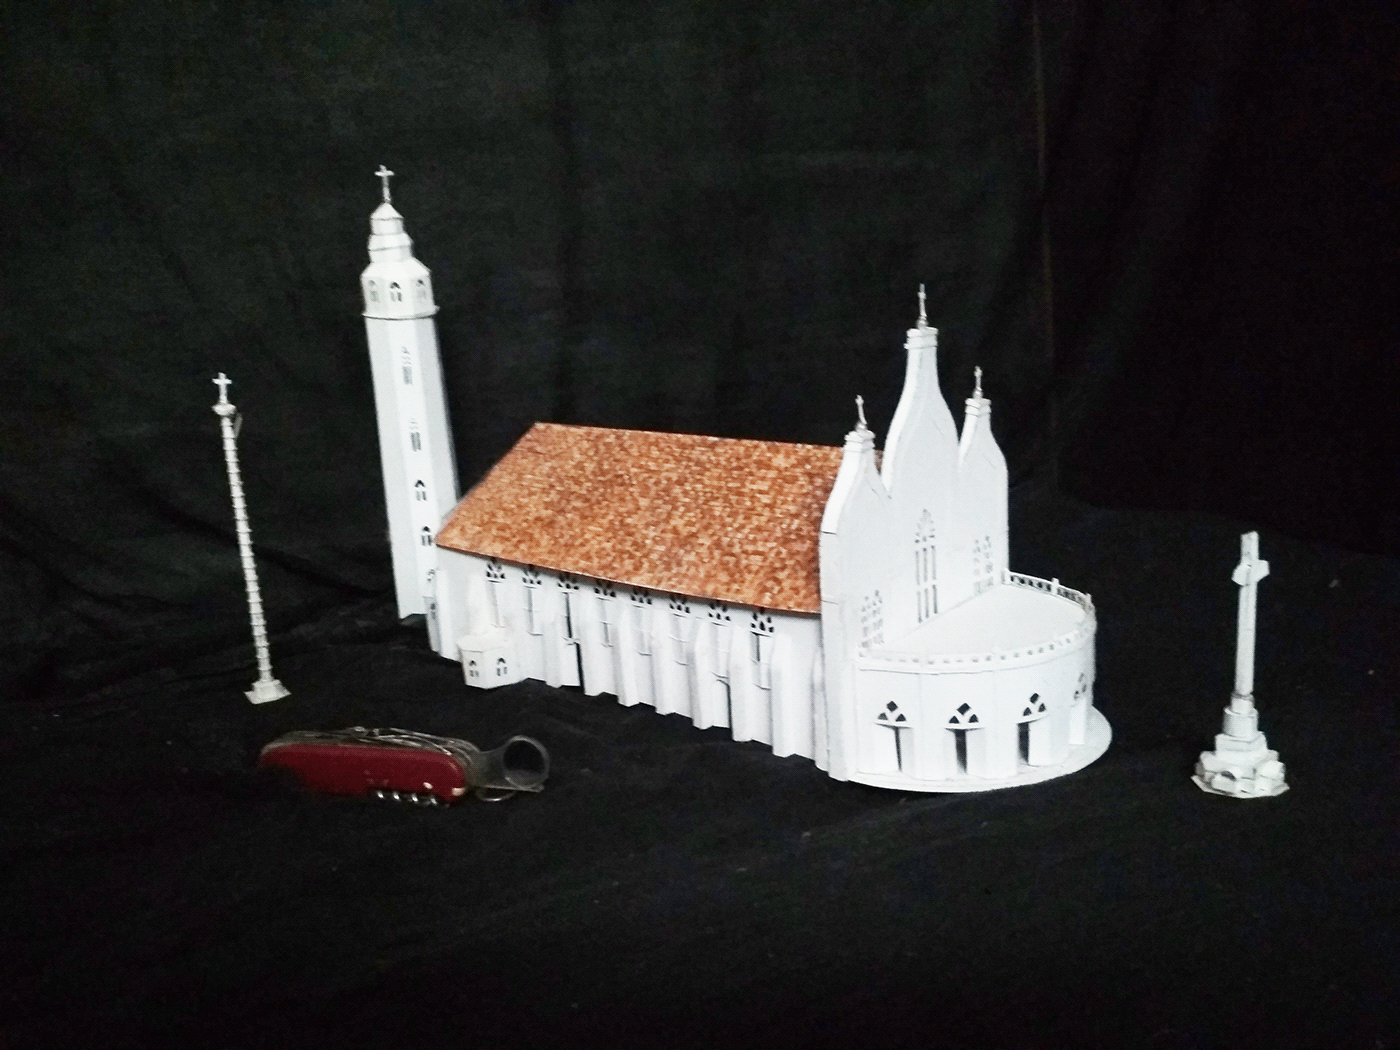 scale model